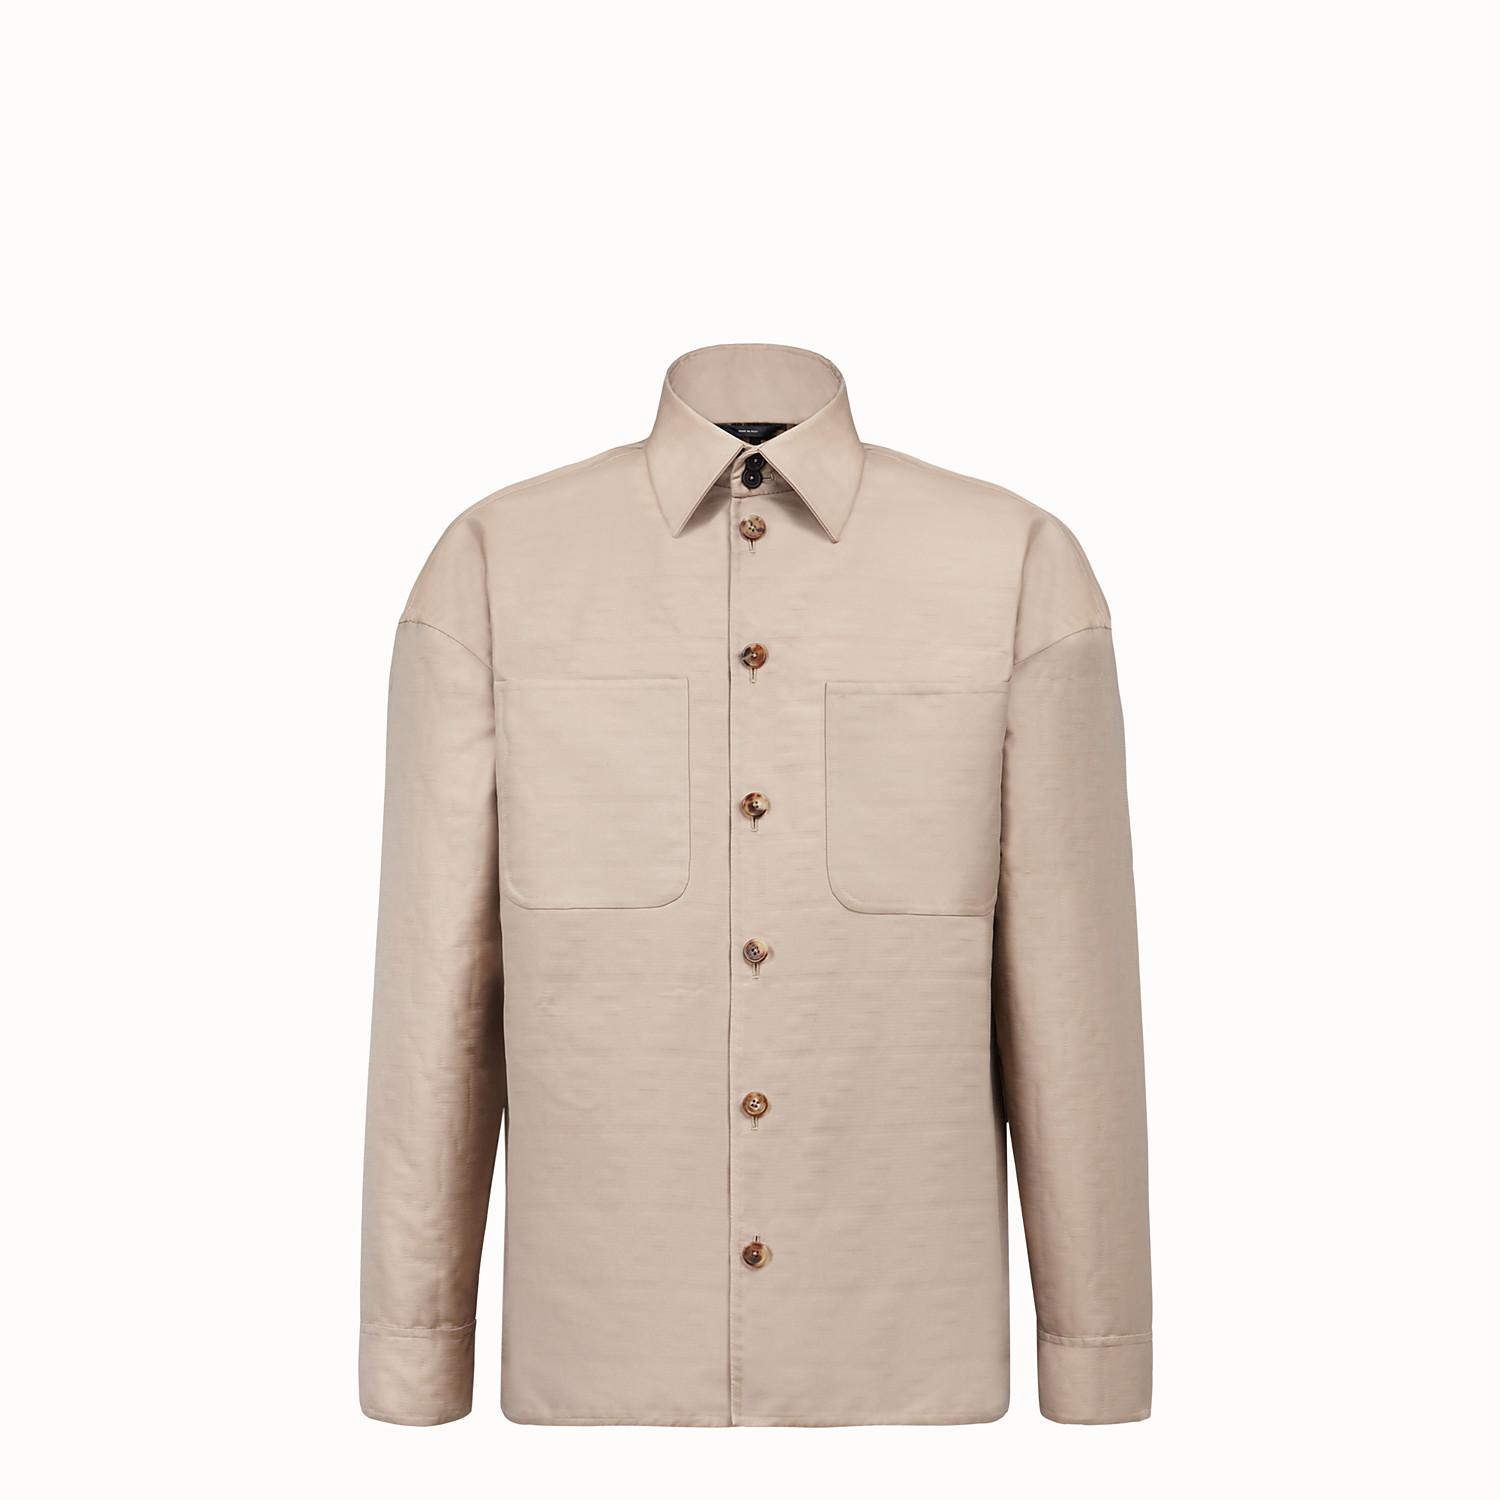 Fendi Synthetic Blouson Jacket in Beige (Natural) for Men - Lyst